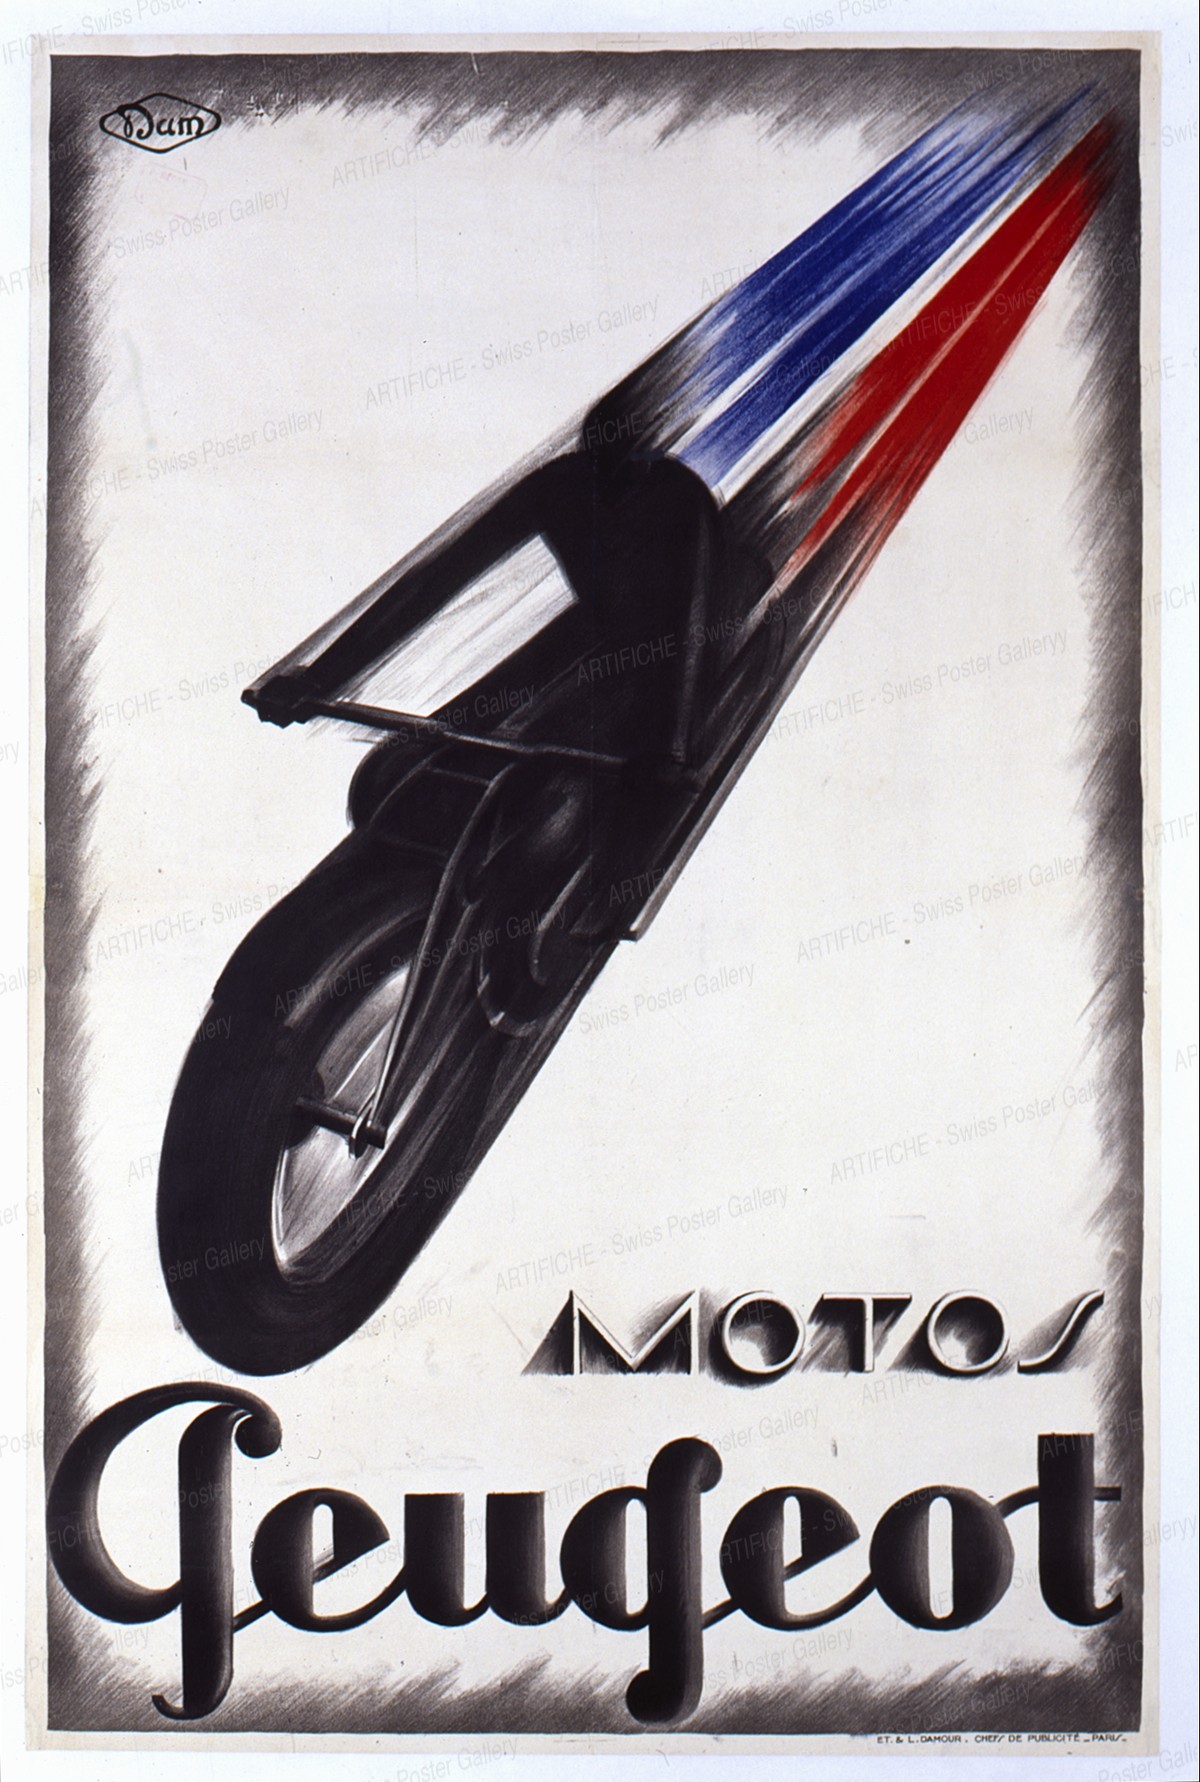 Motos Peugeot, Lajos Marton